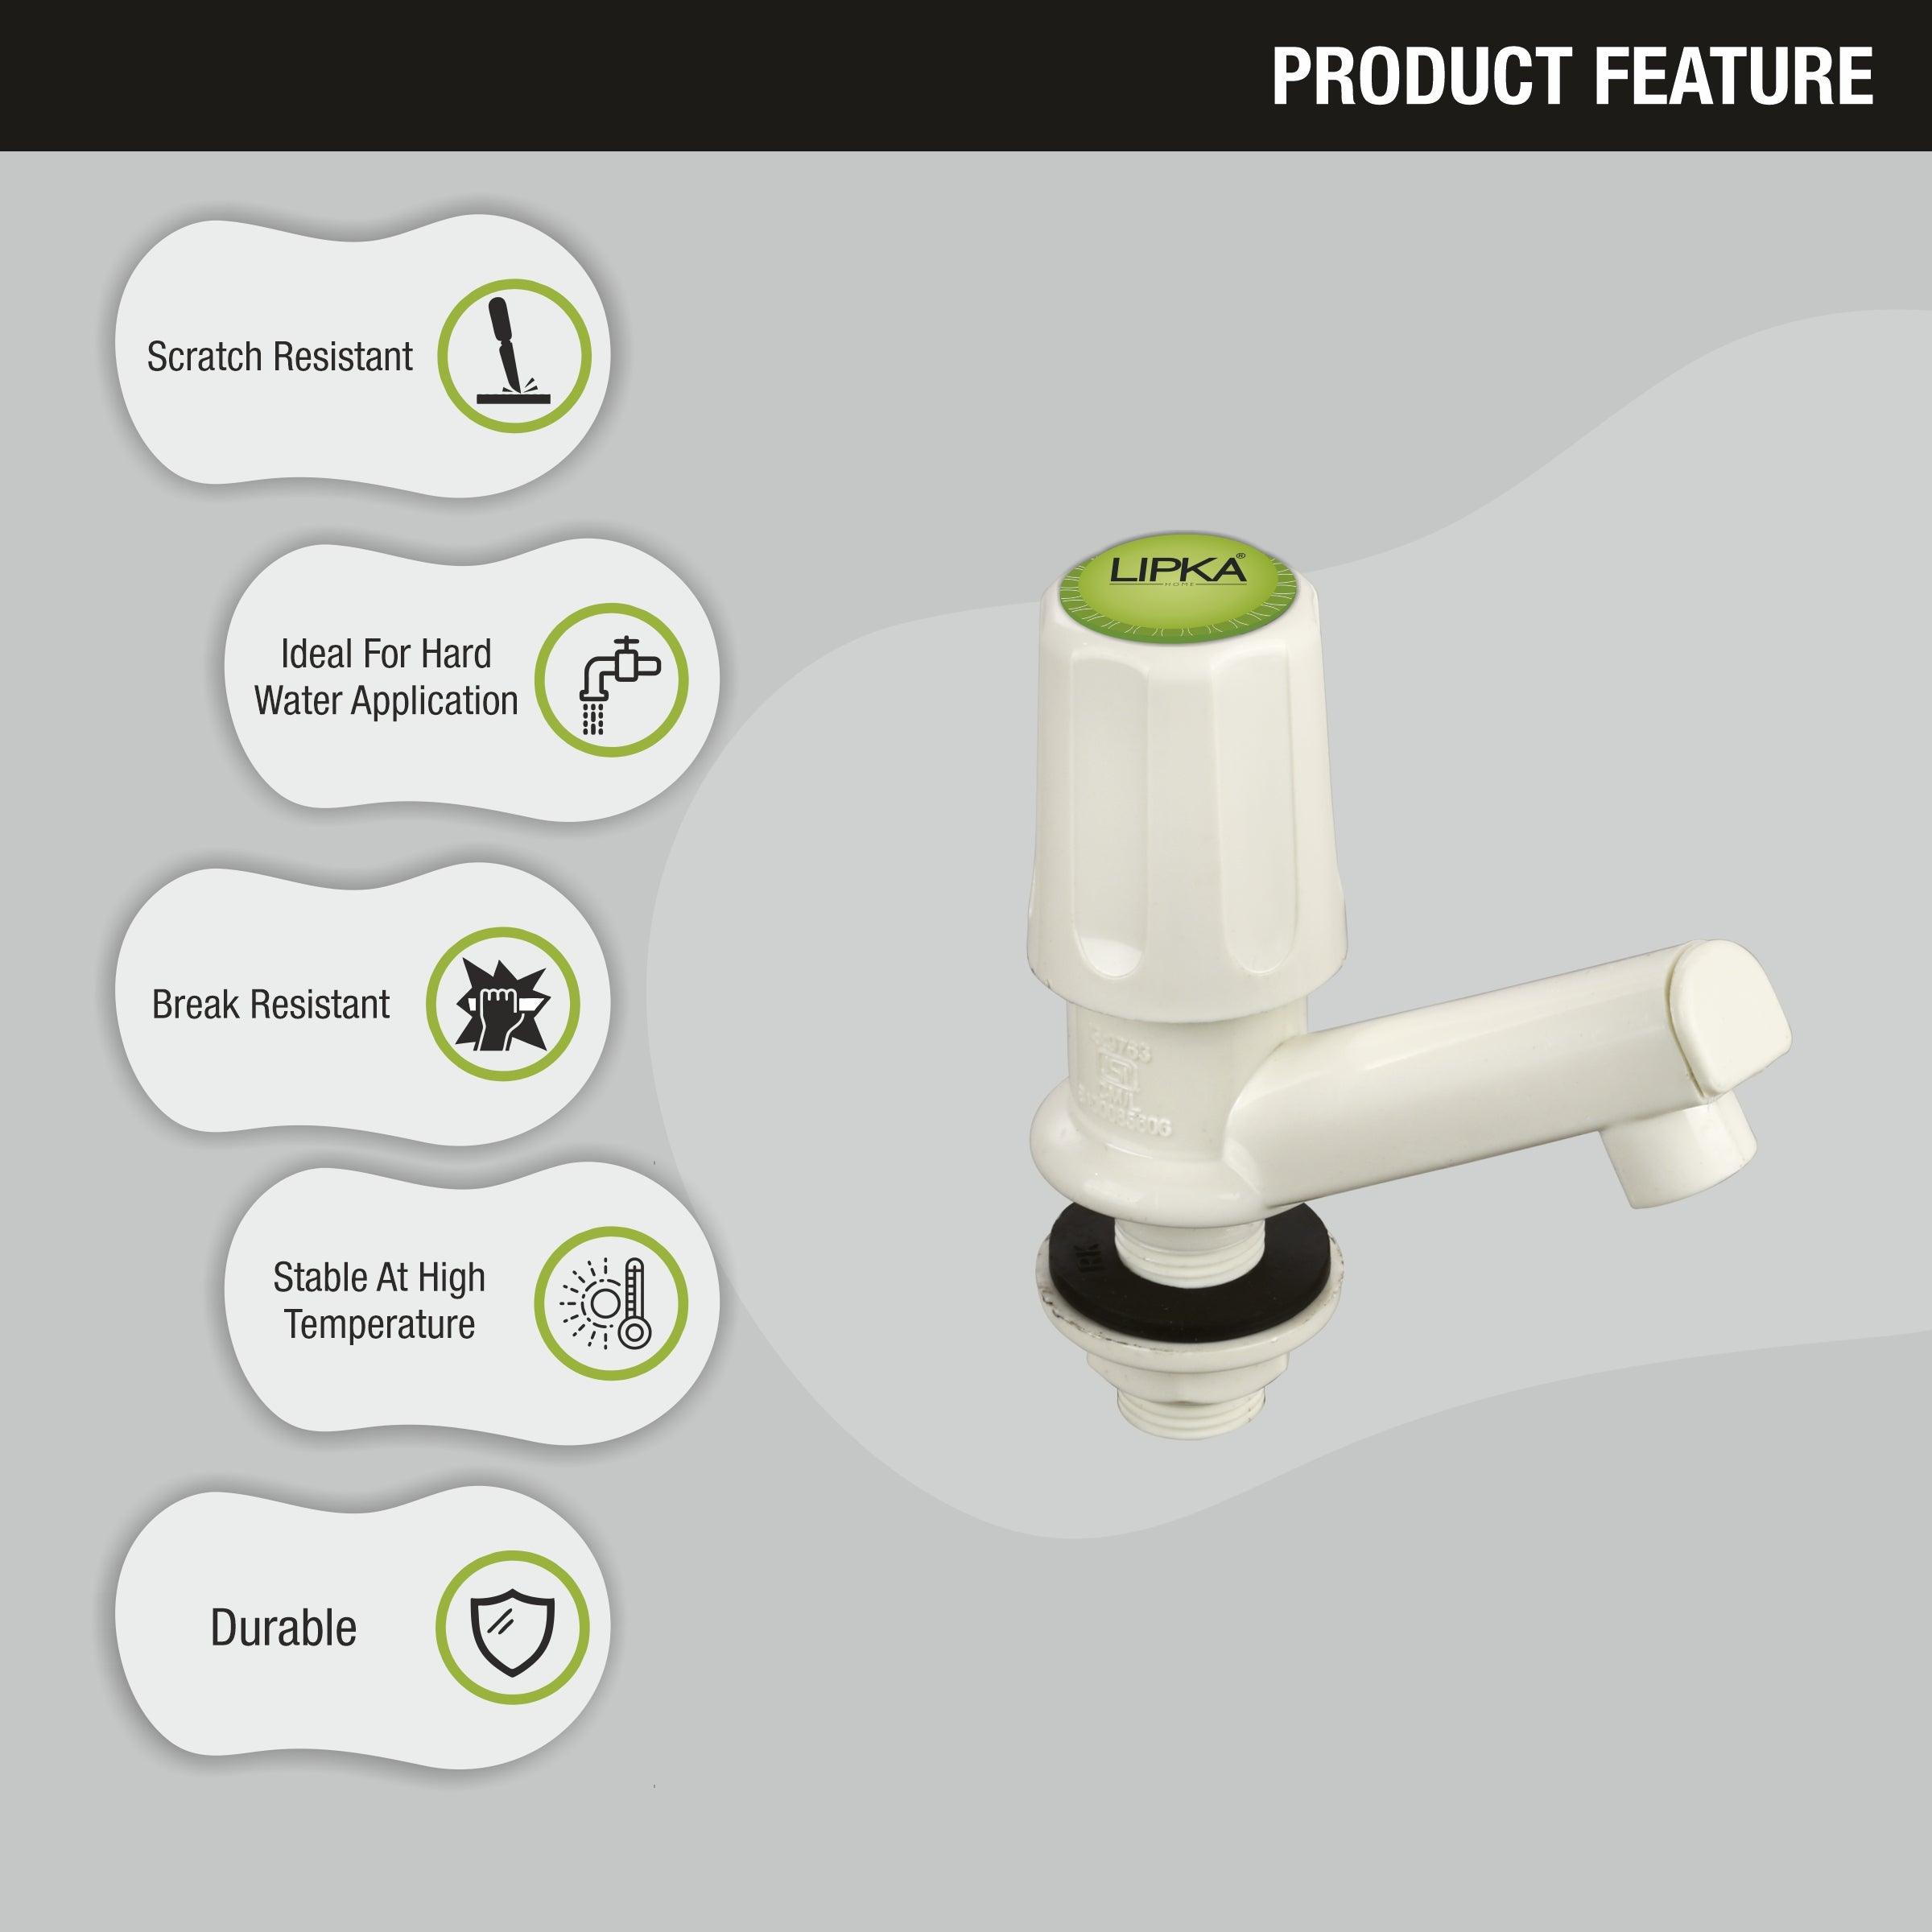 Royal Pillar Tap PTMT Faucet features